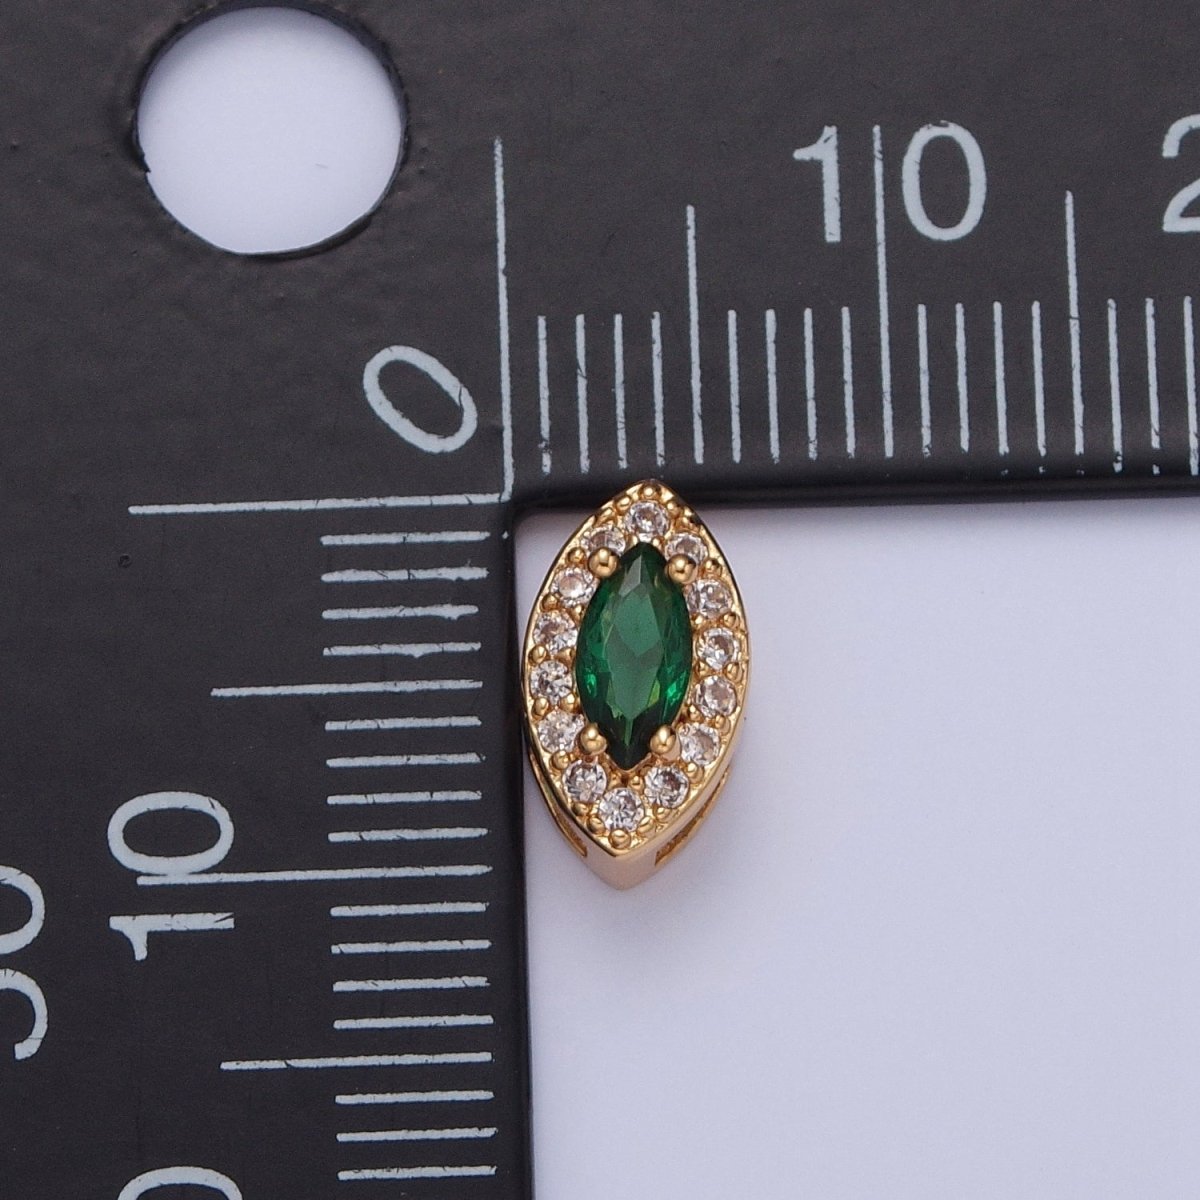 24K Gold Filled Evil Eye Spacer Bead, CZ Micro Pave Amulet Charm Bracelet Necklace Supply For DIY Jewelry Making B-446 B-447 B-449 B-451 B-456 B-572 W-781 - DLUXCA